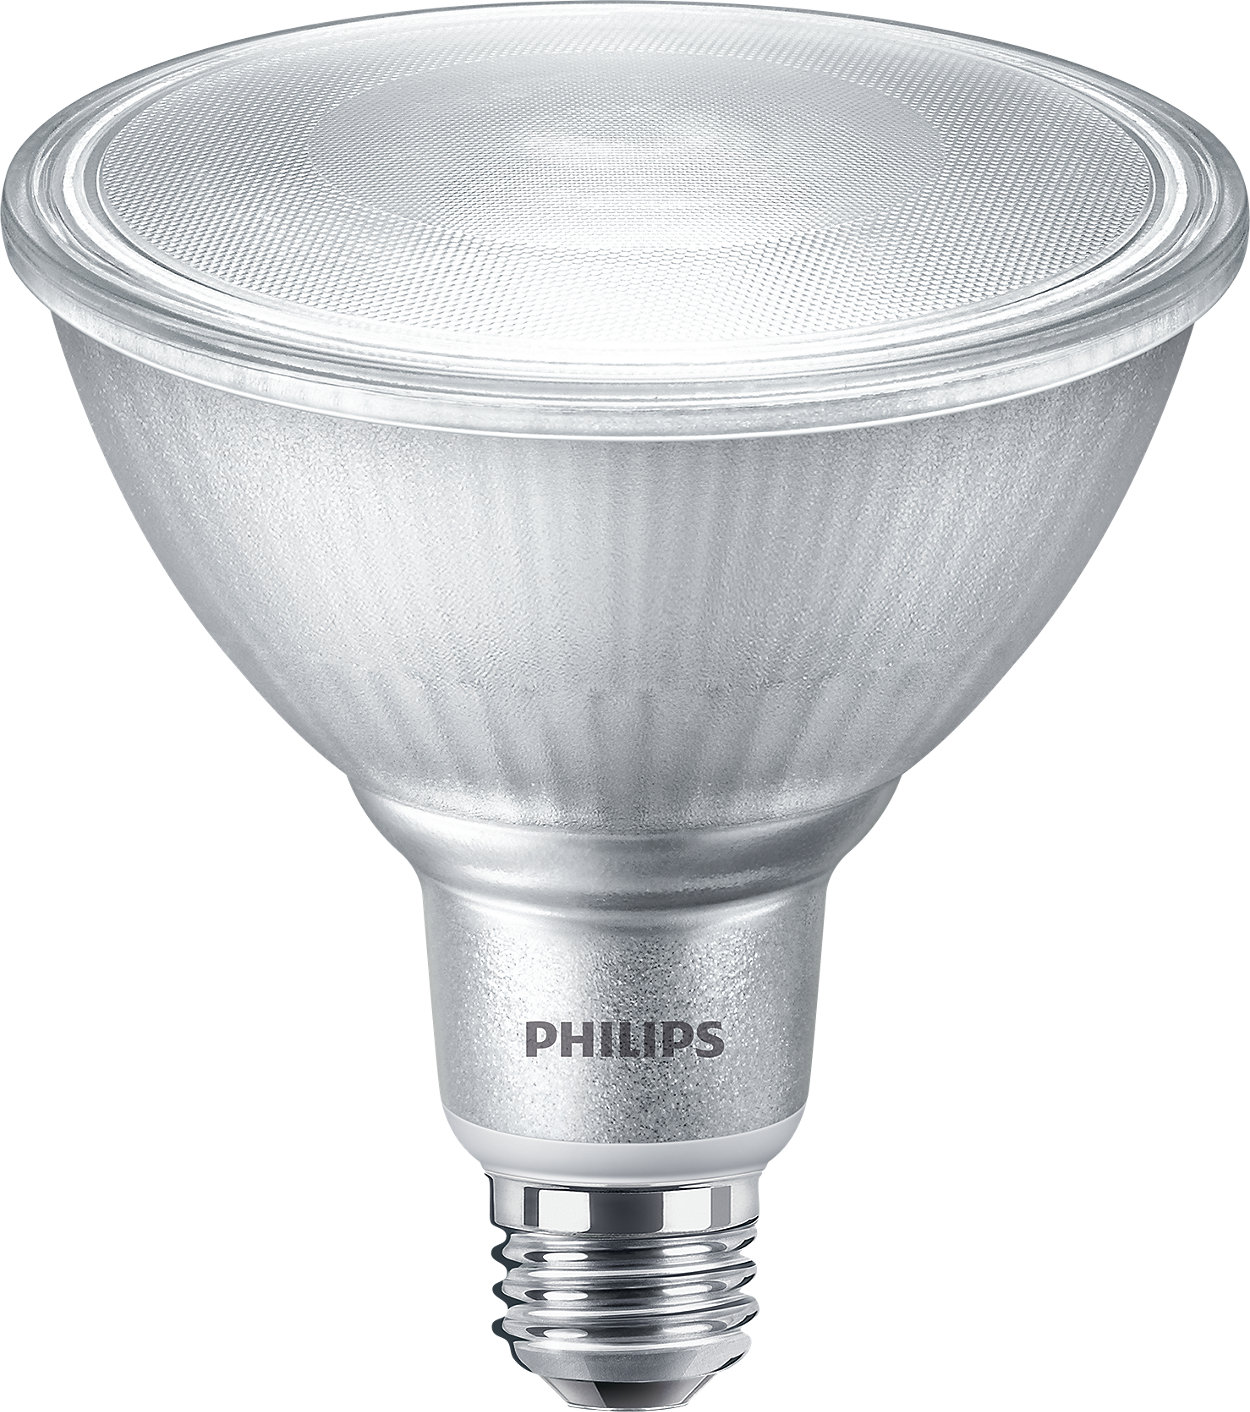 One bulb, four light settings